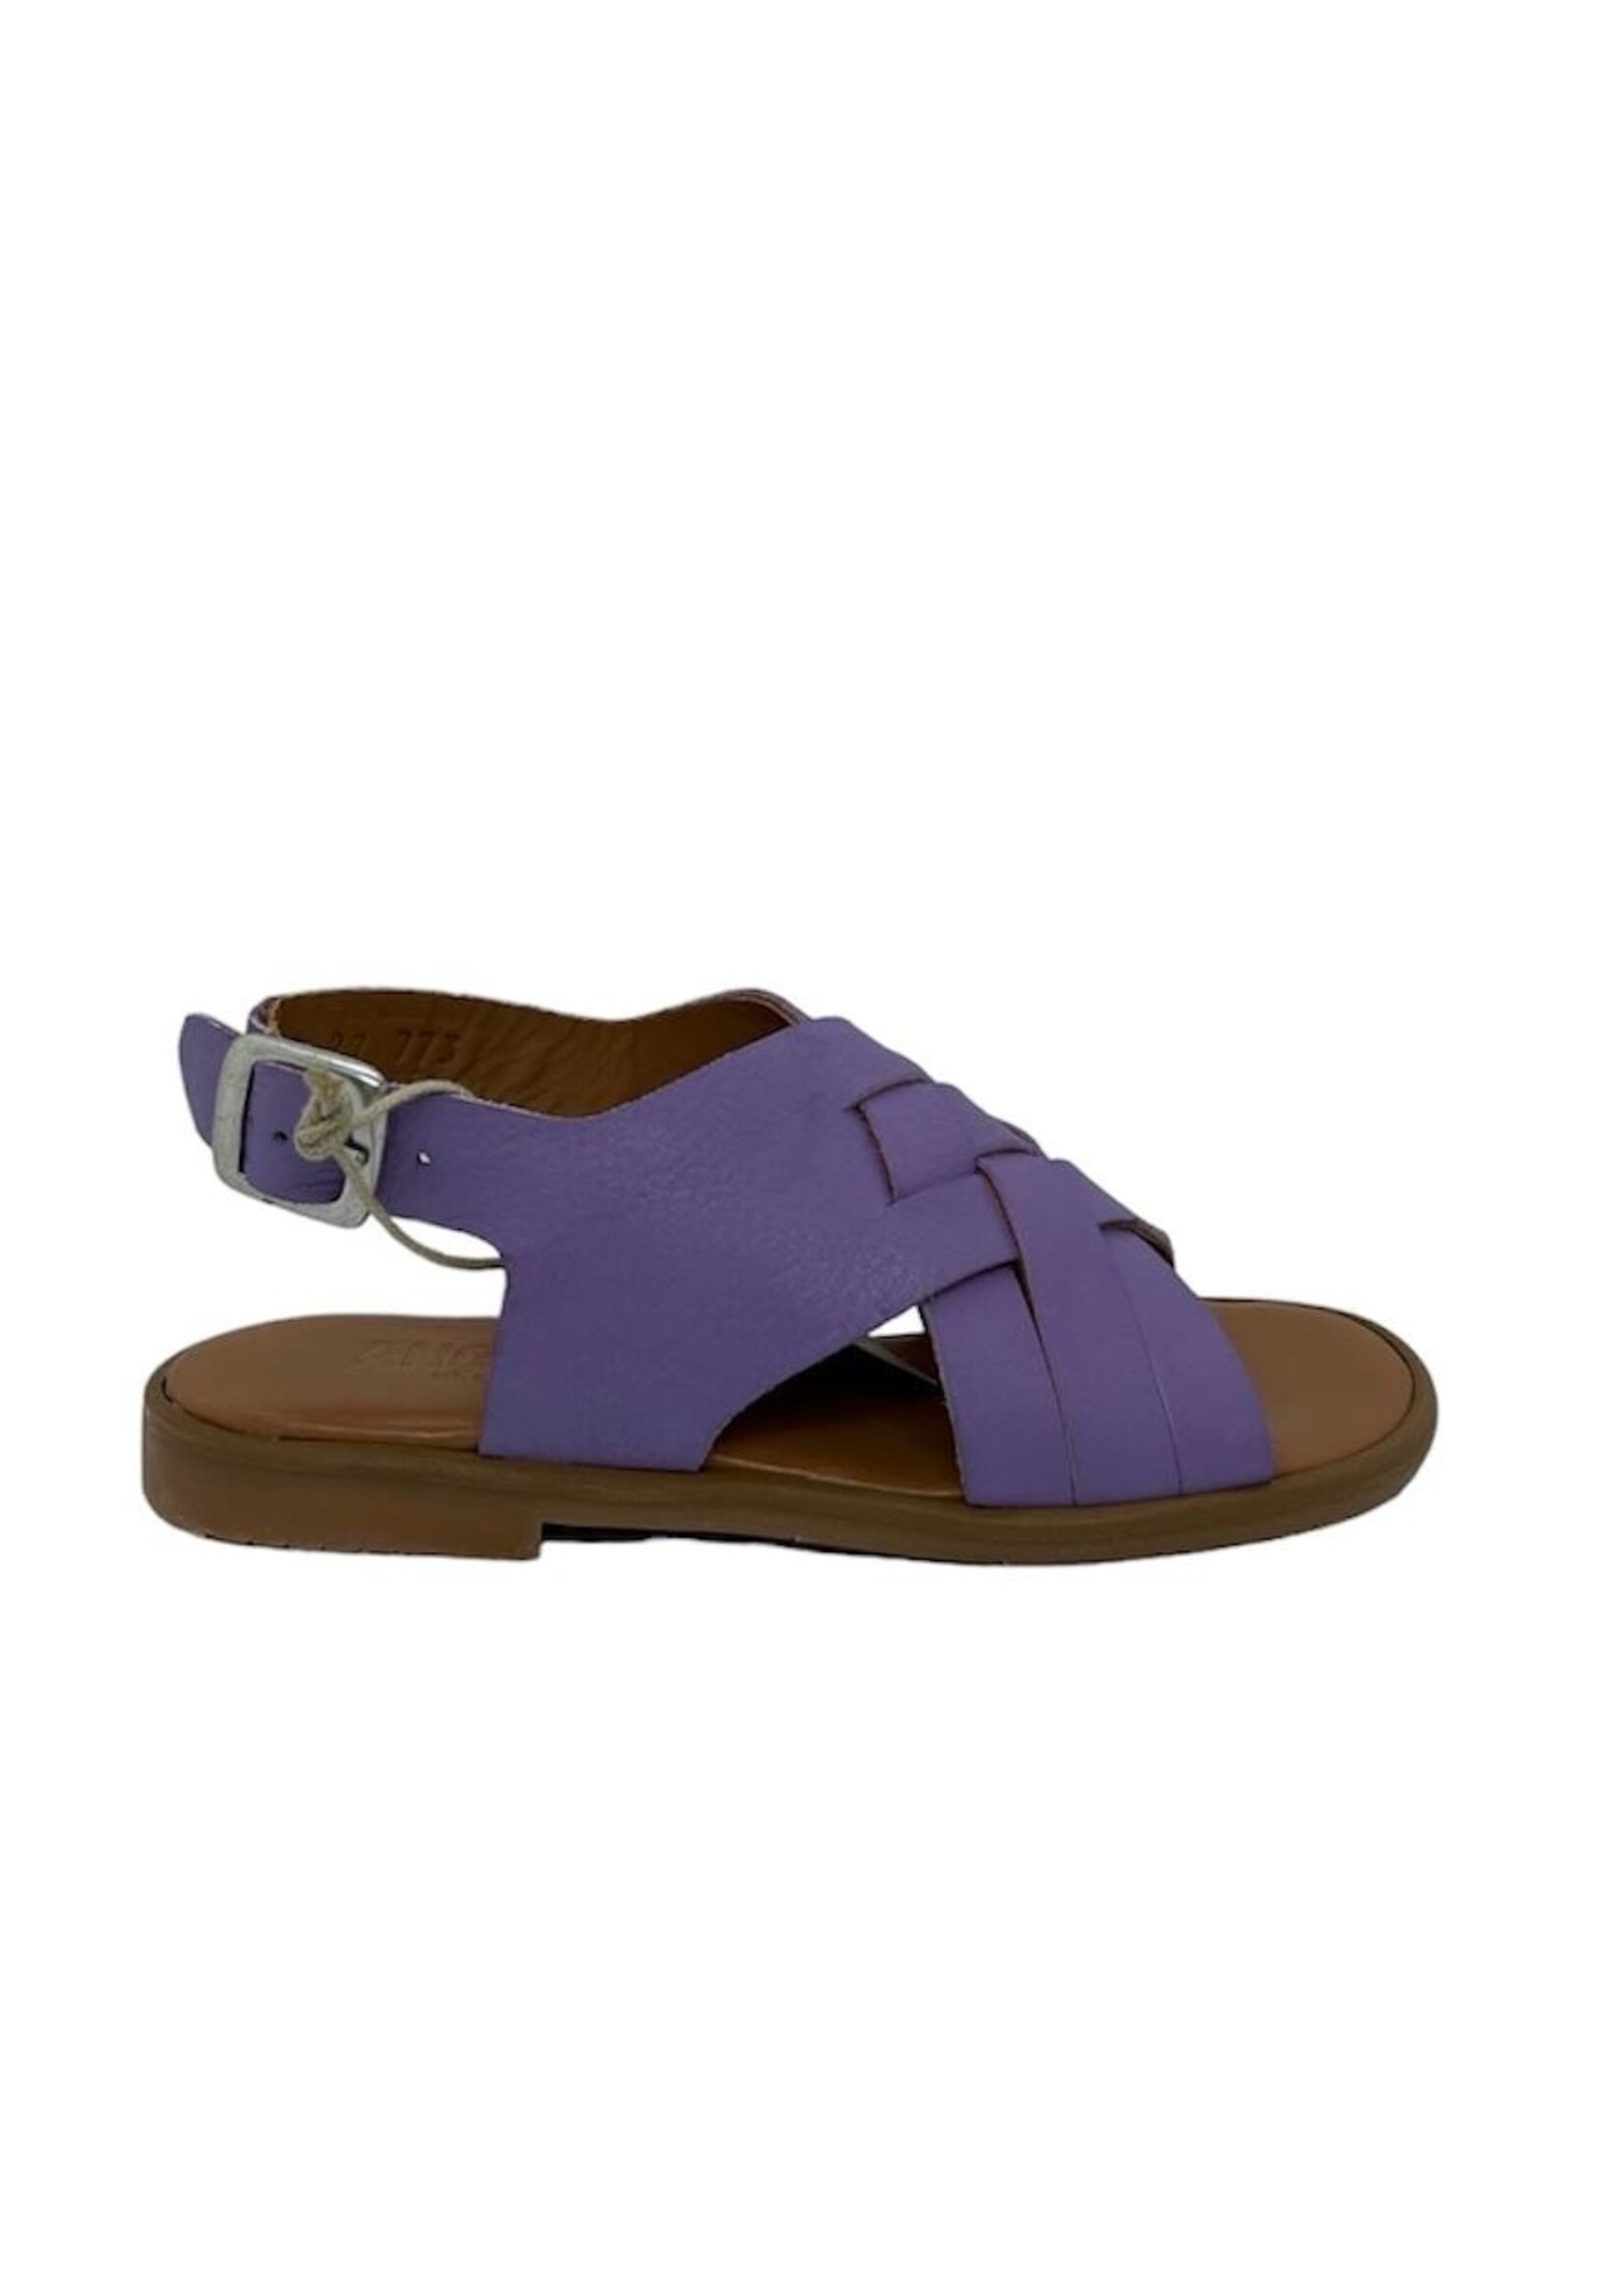 Angulus 0656-101 open toe sandal buckle closure lilac